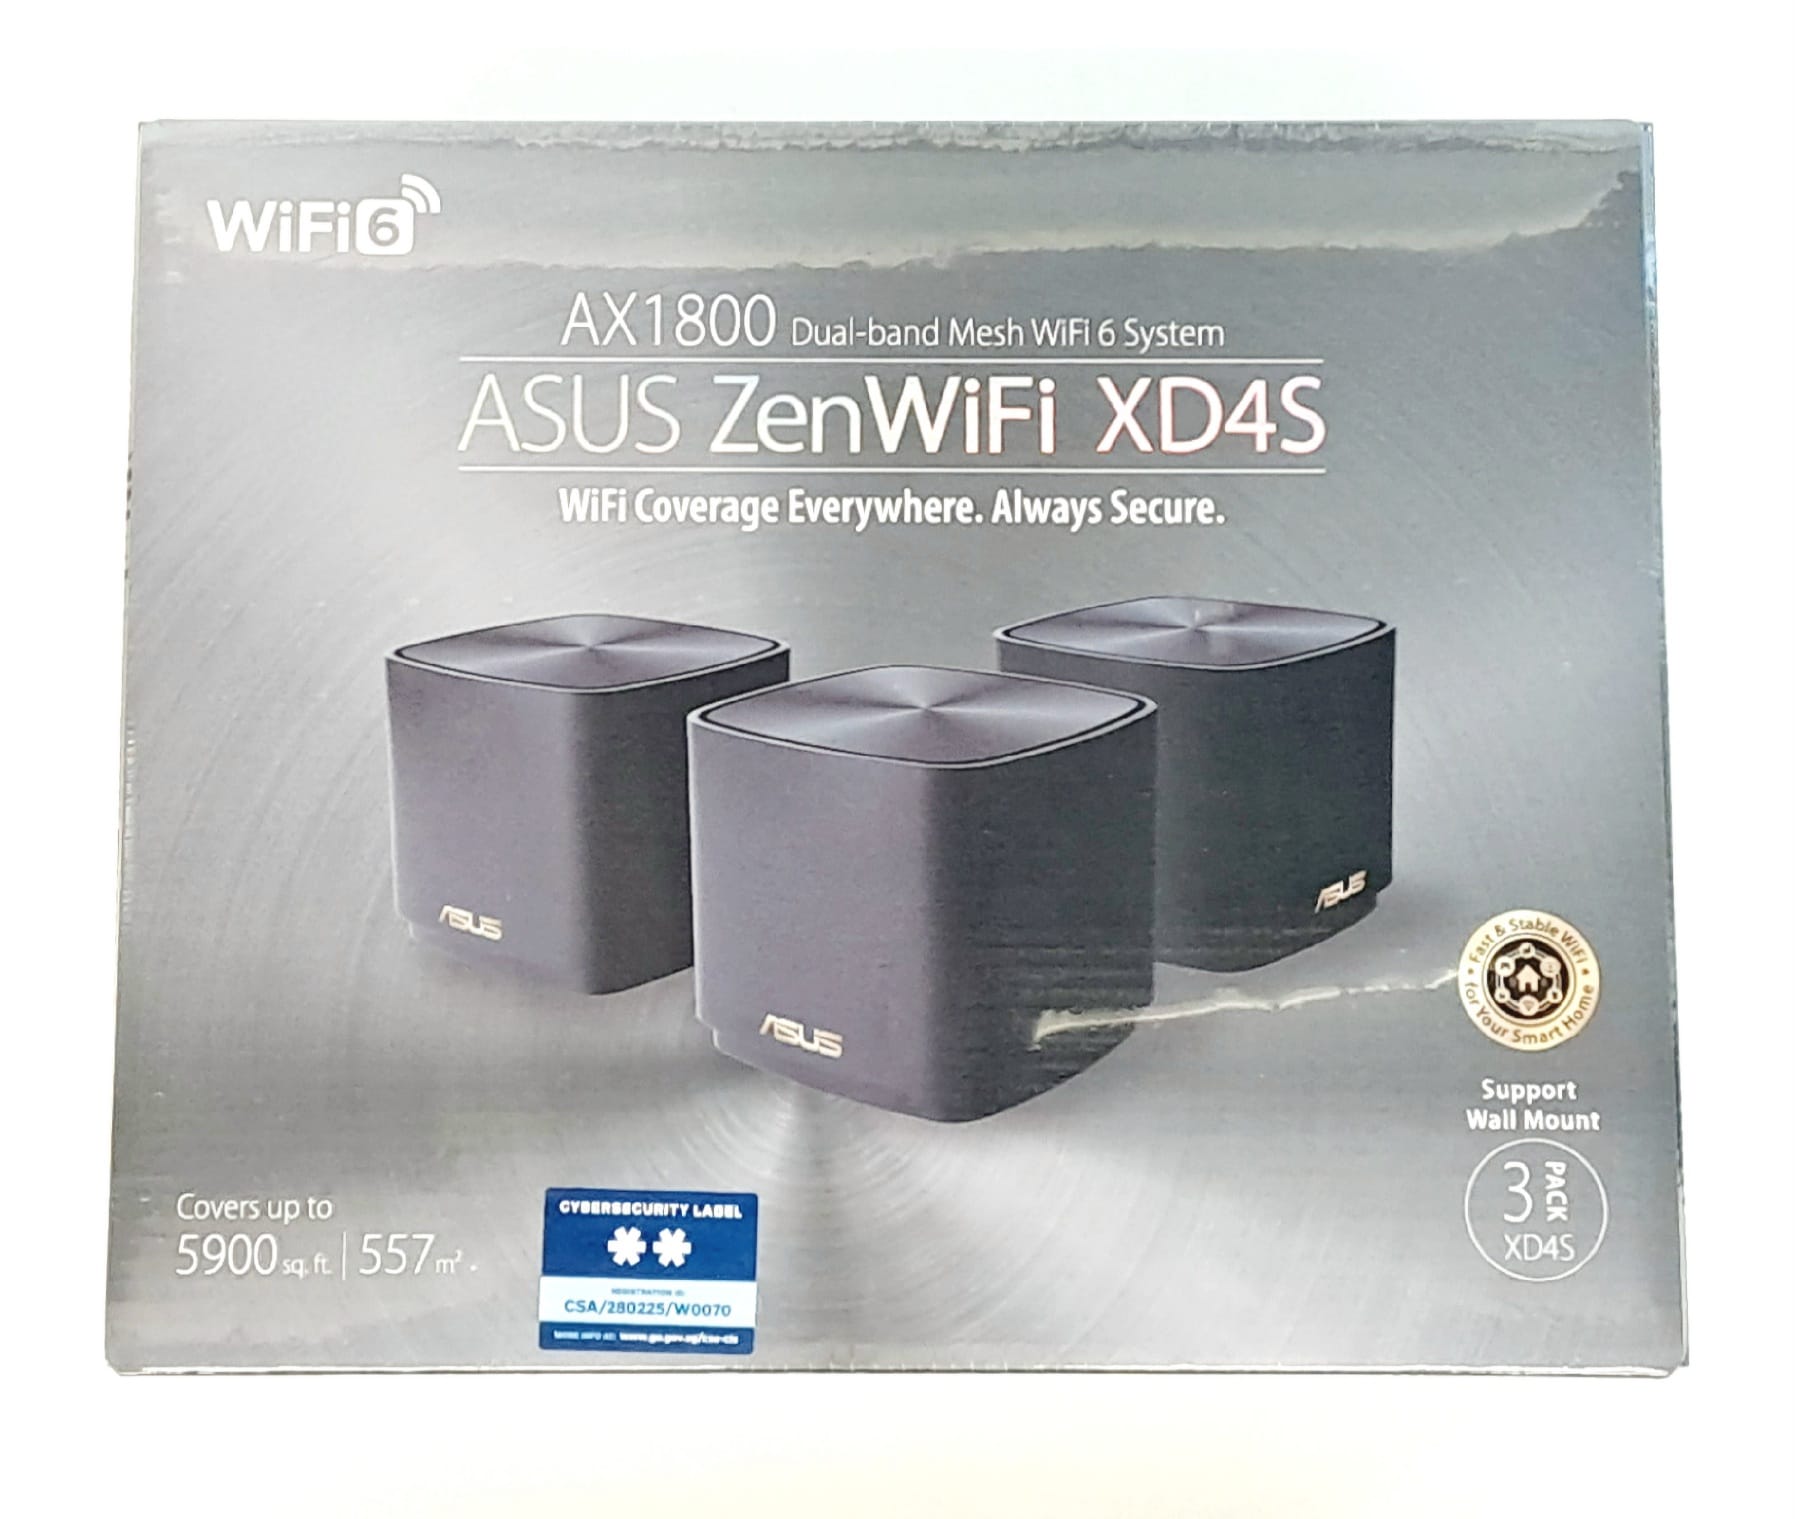 ASUS ZenWiFi XD4S AX1800 Dual-band Mesh WiFi 6 System (3-pk)